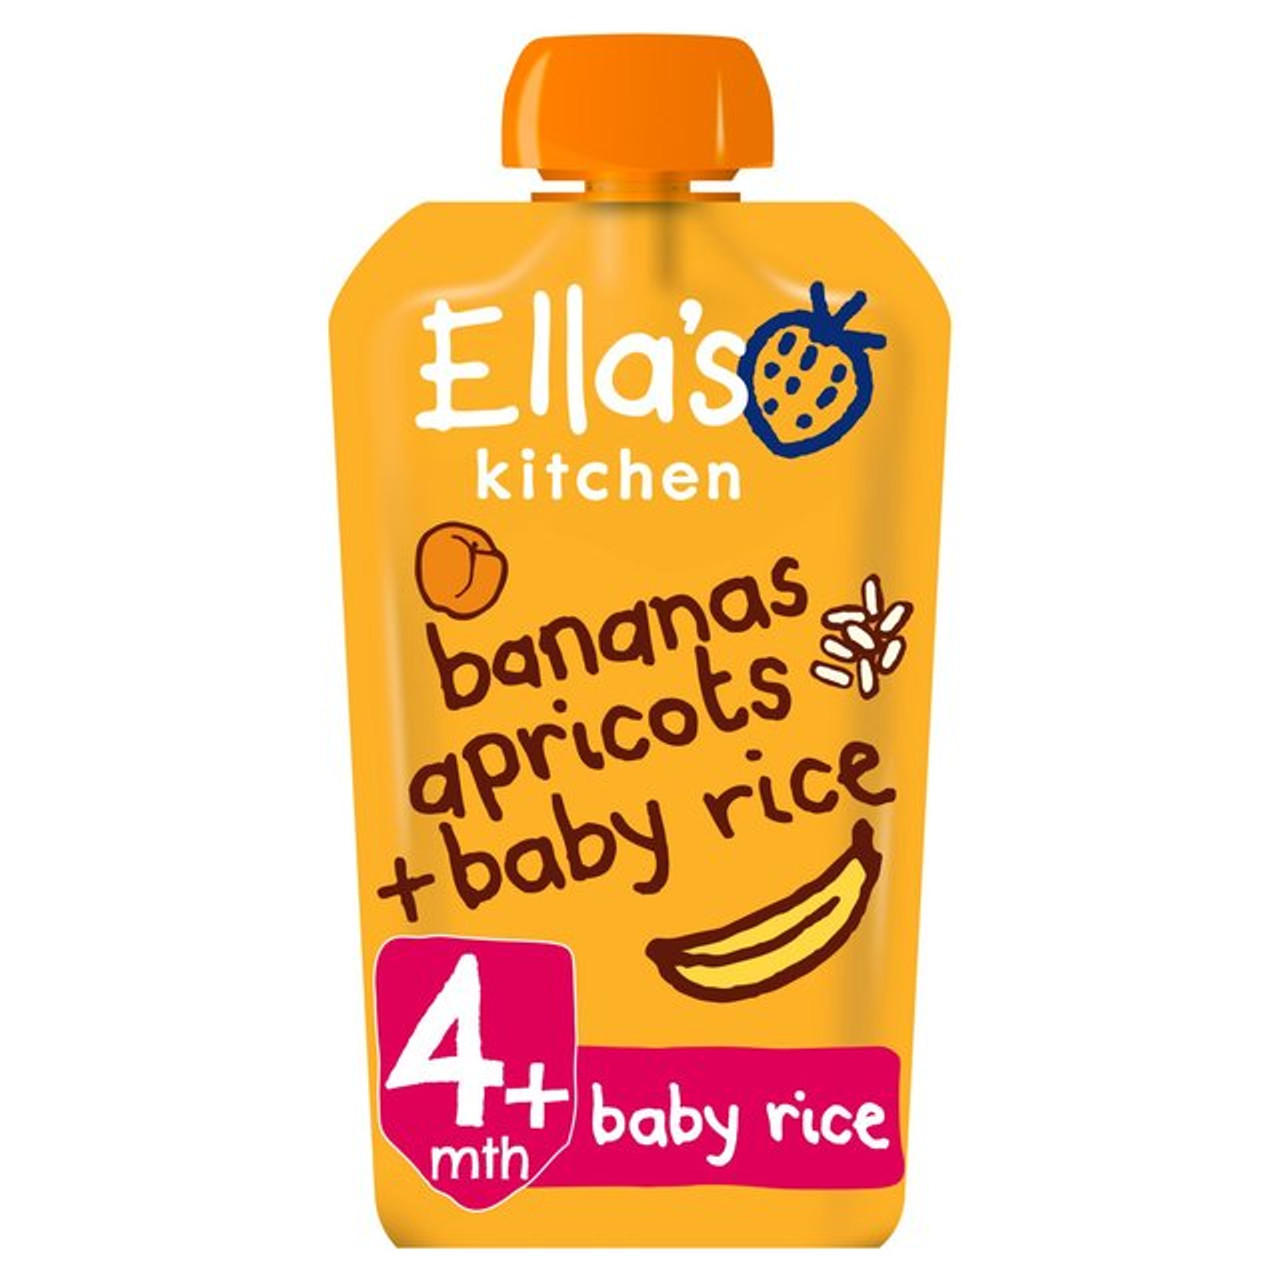 ella's kitchen banana multigrain baby rice